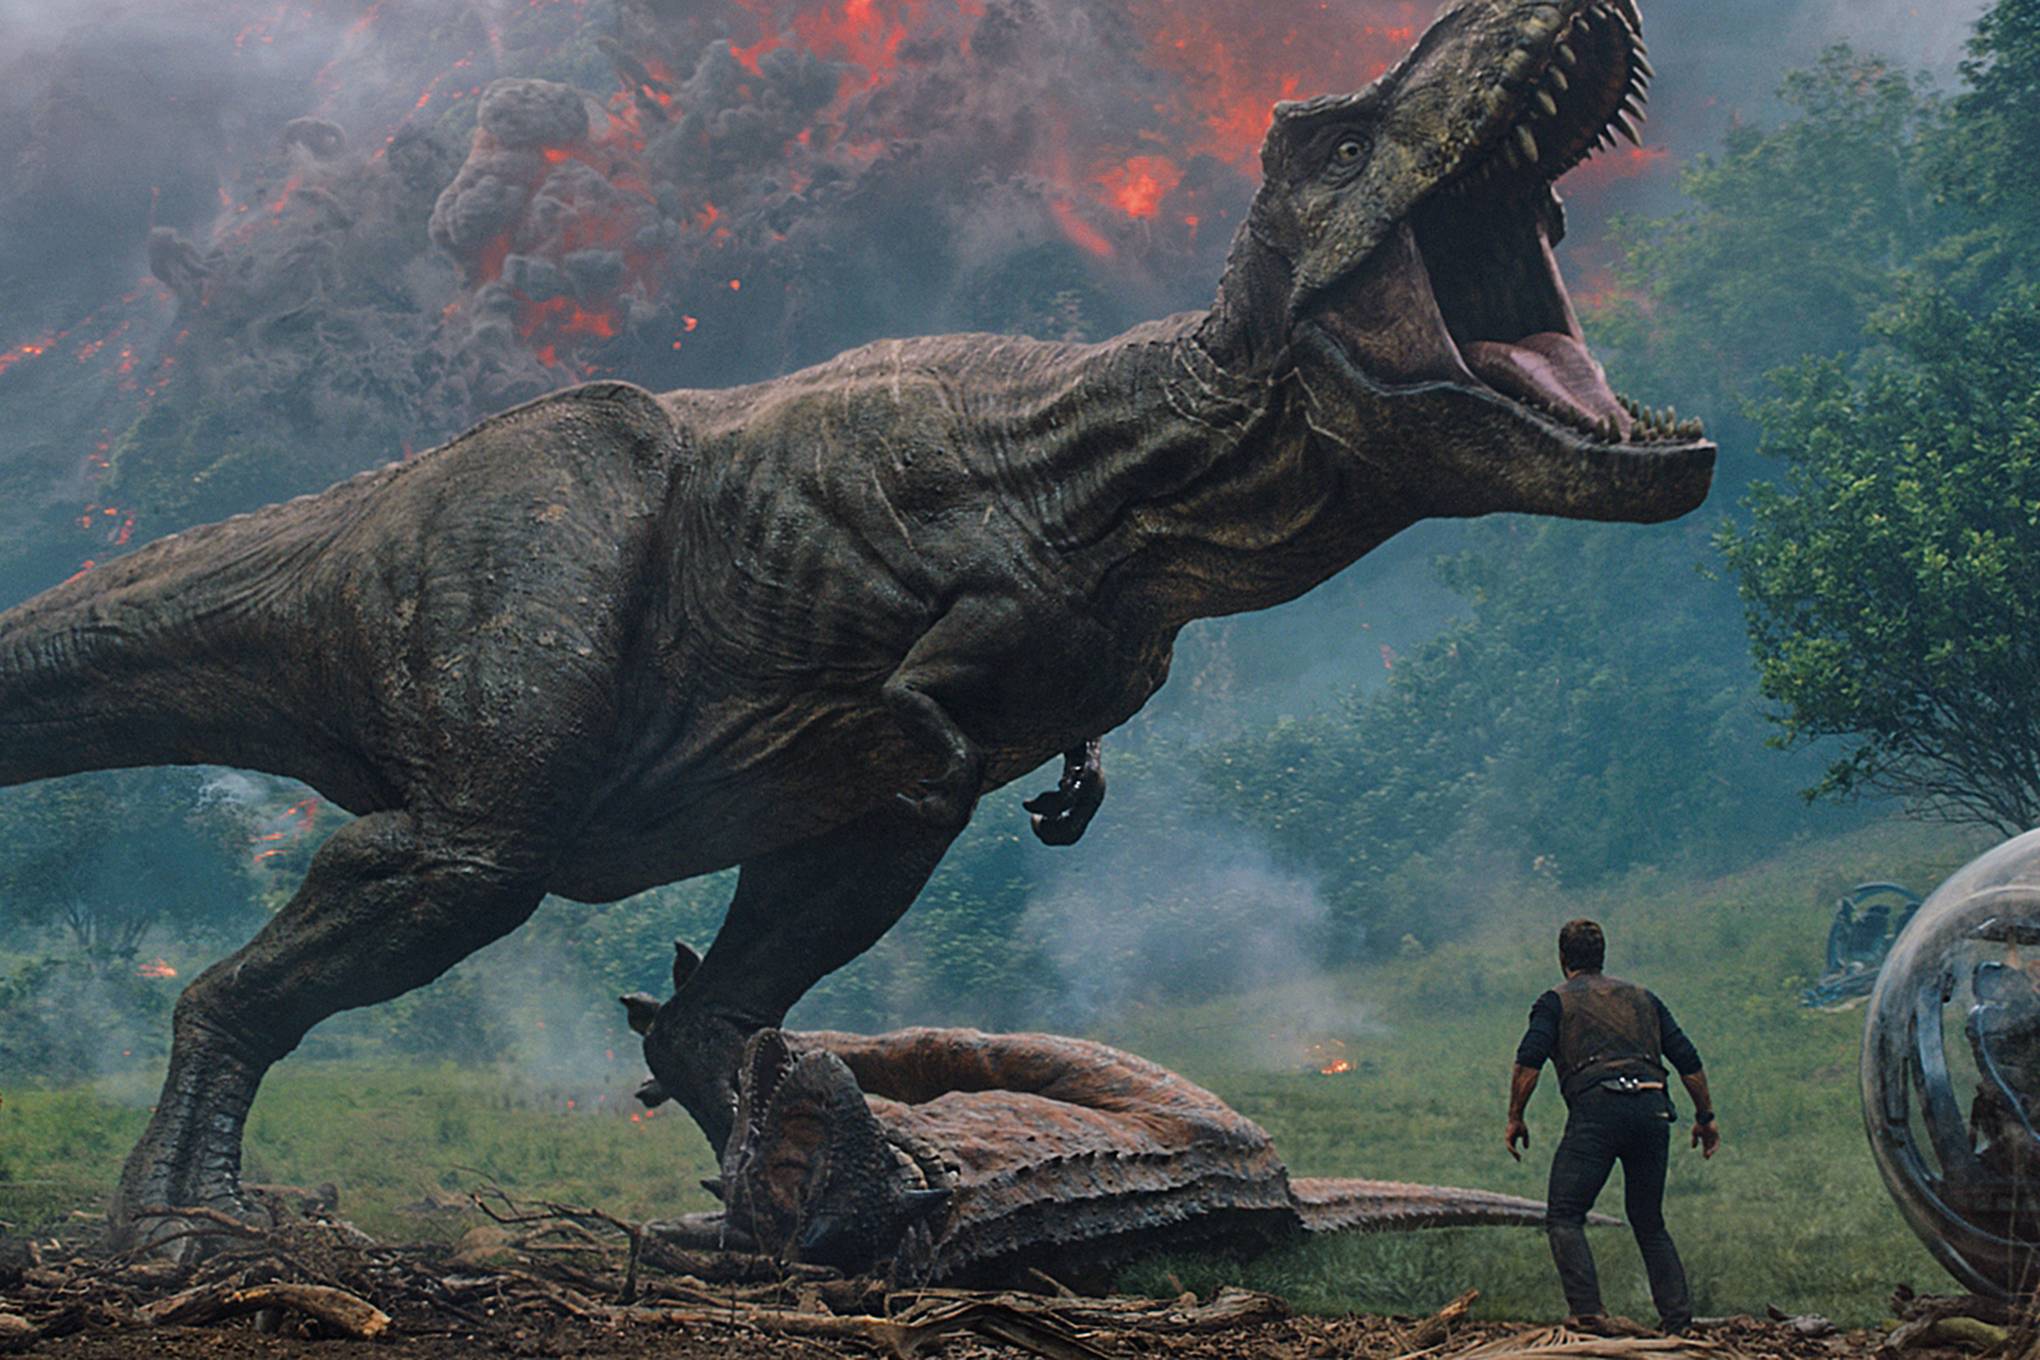 Where was 'Jurassic World: Fallen Kingdom' filmed?